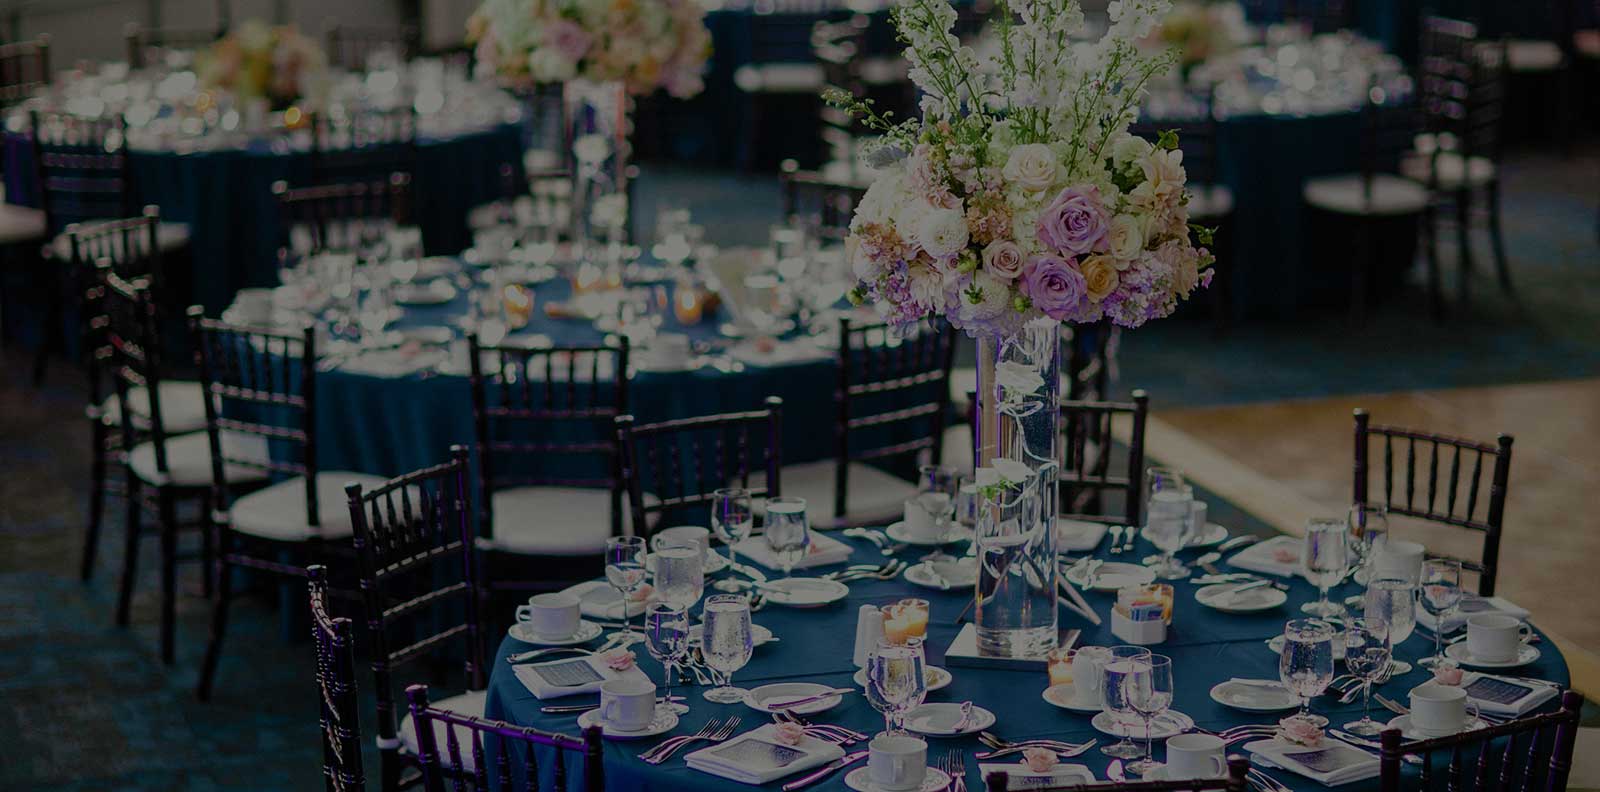 wedding banquet tables